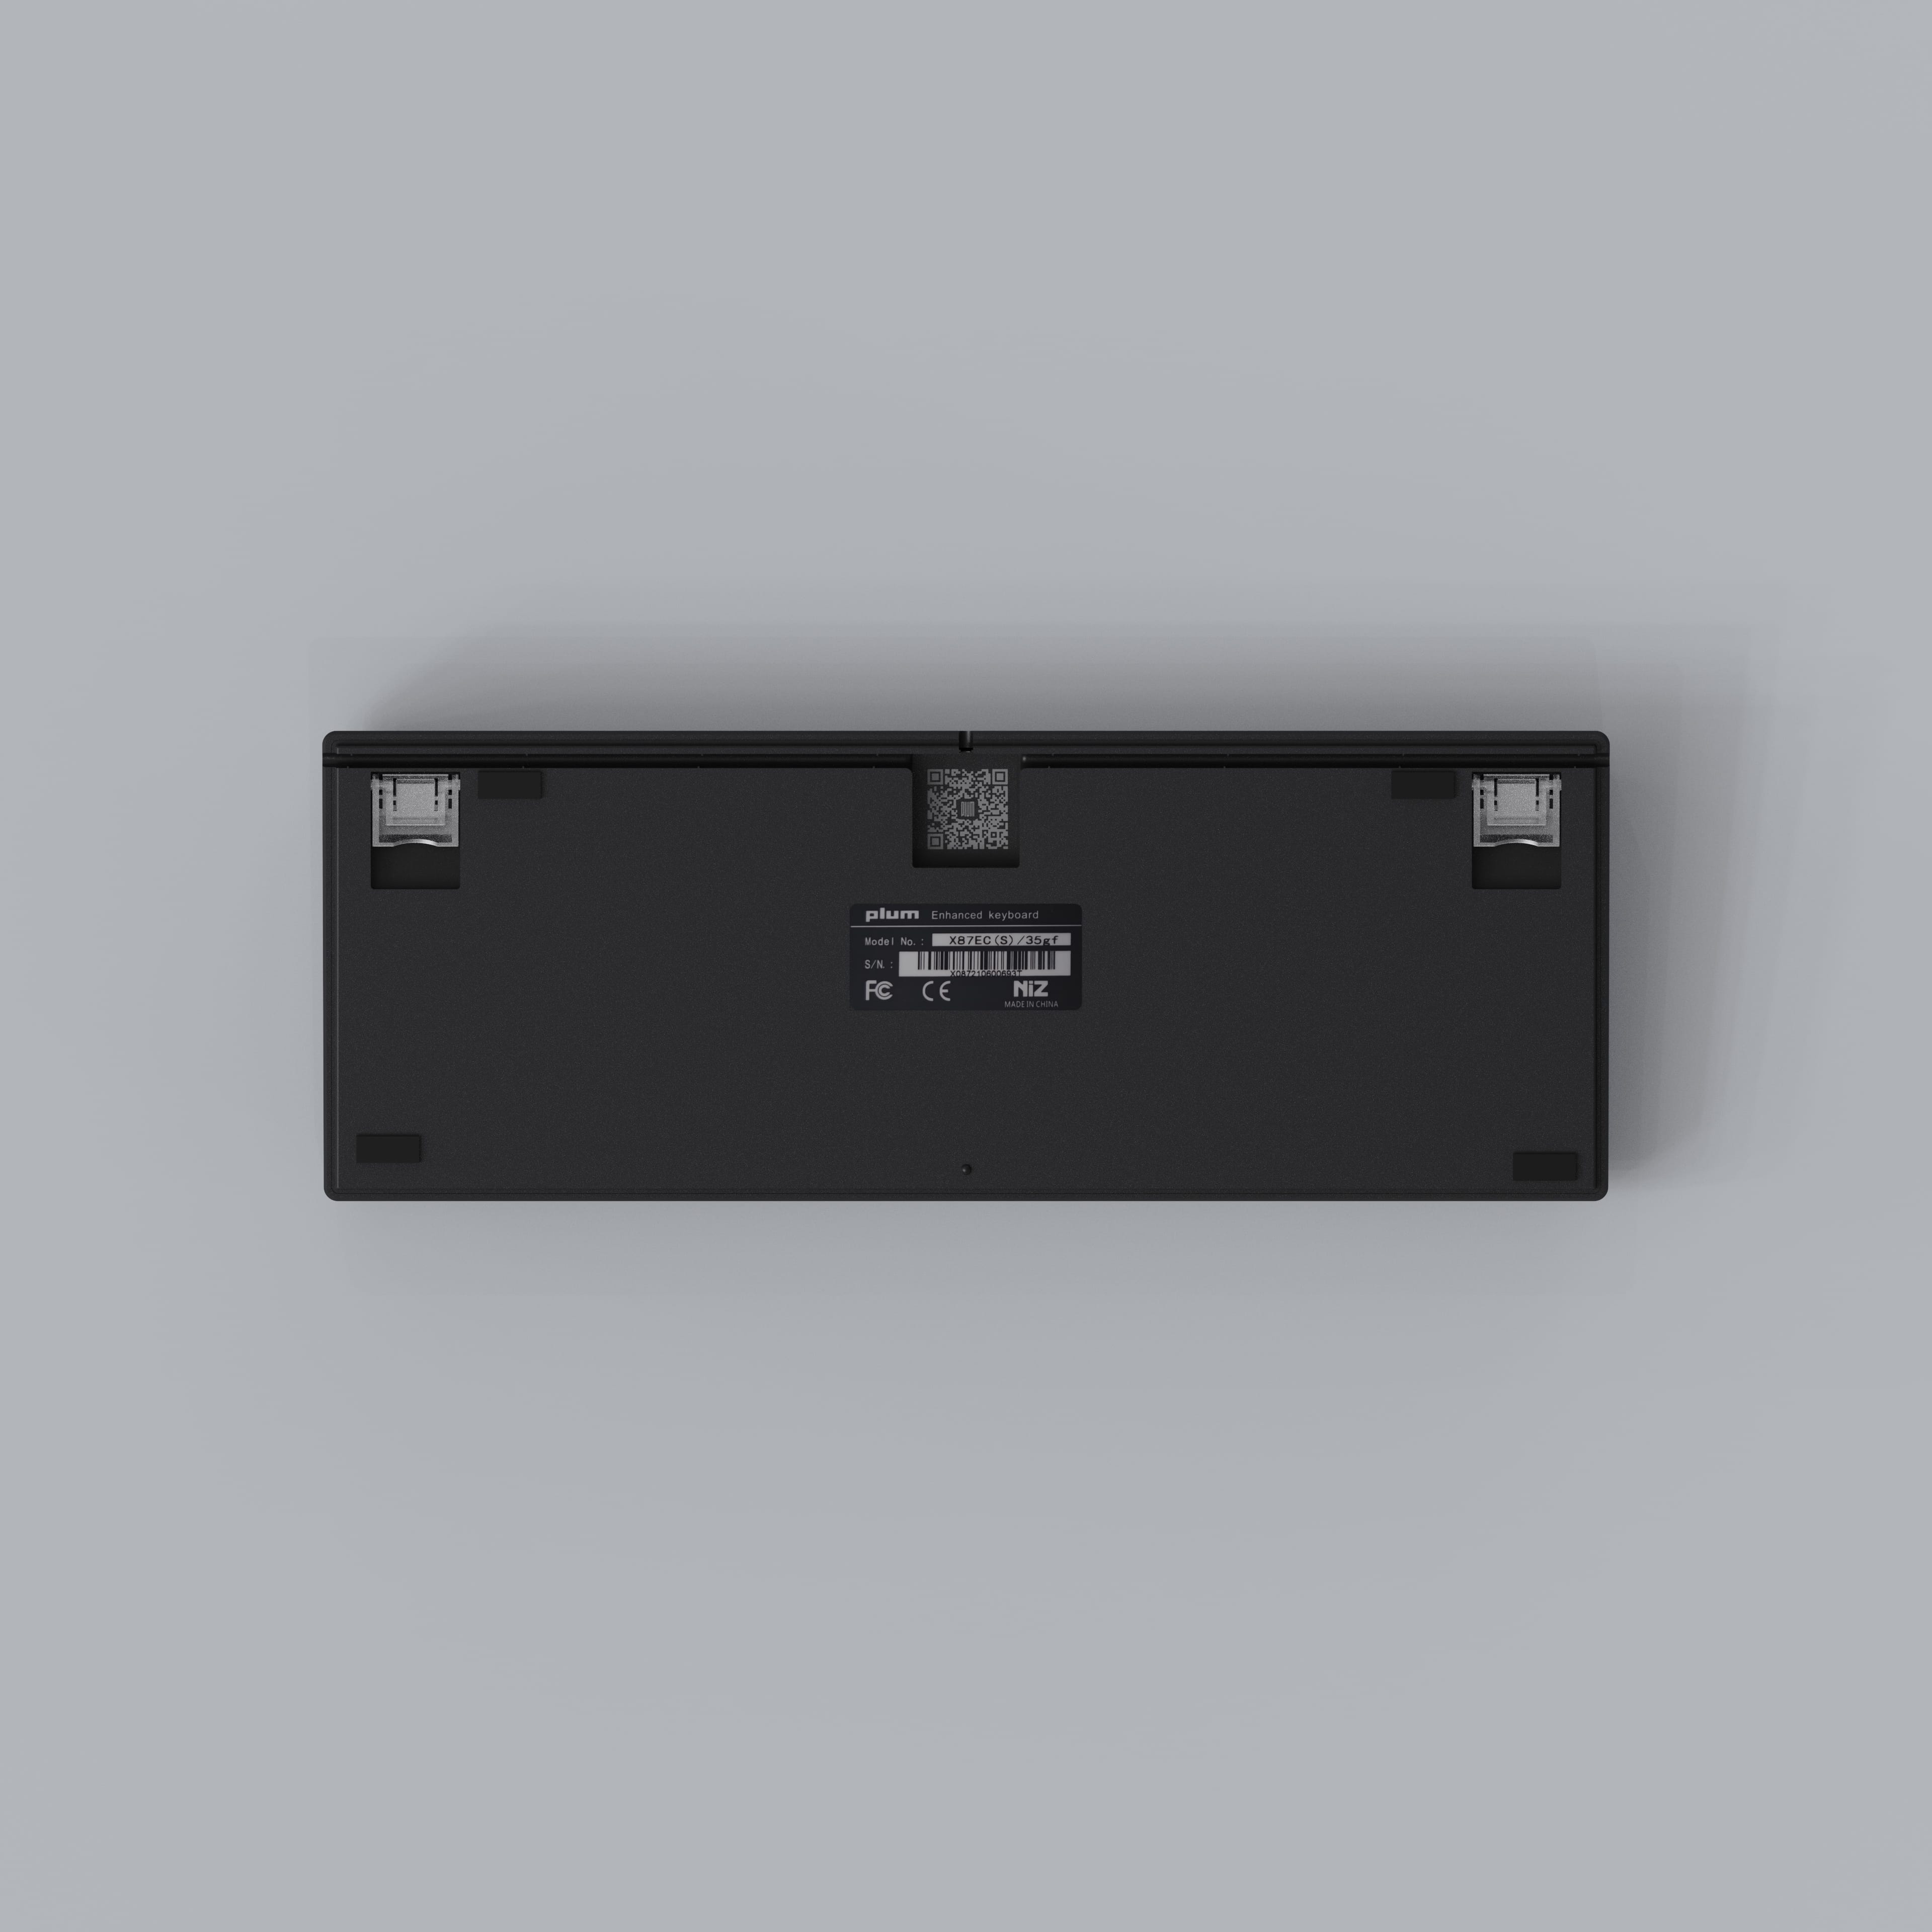 NIZ Keyboard X87 White/Black Capacitive Keyboard